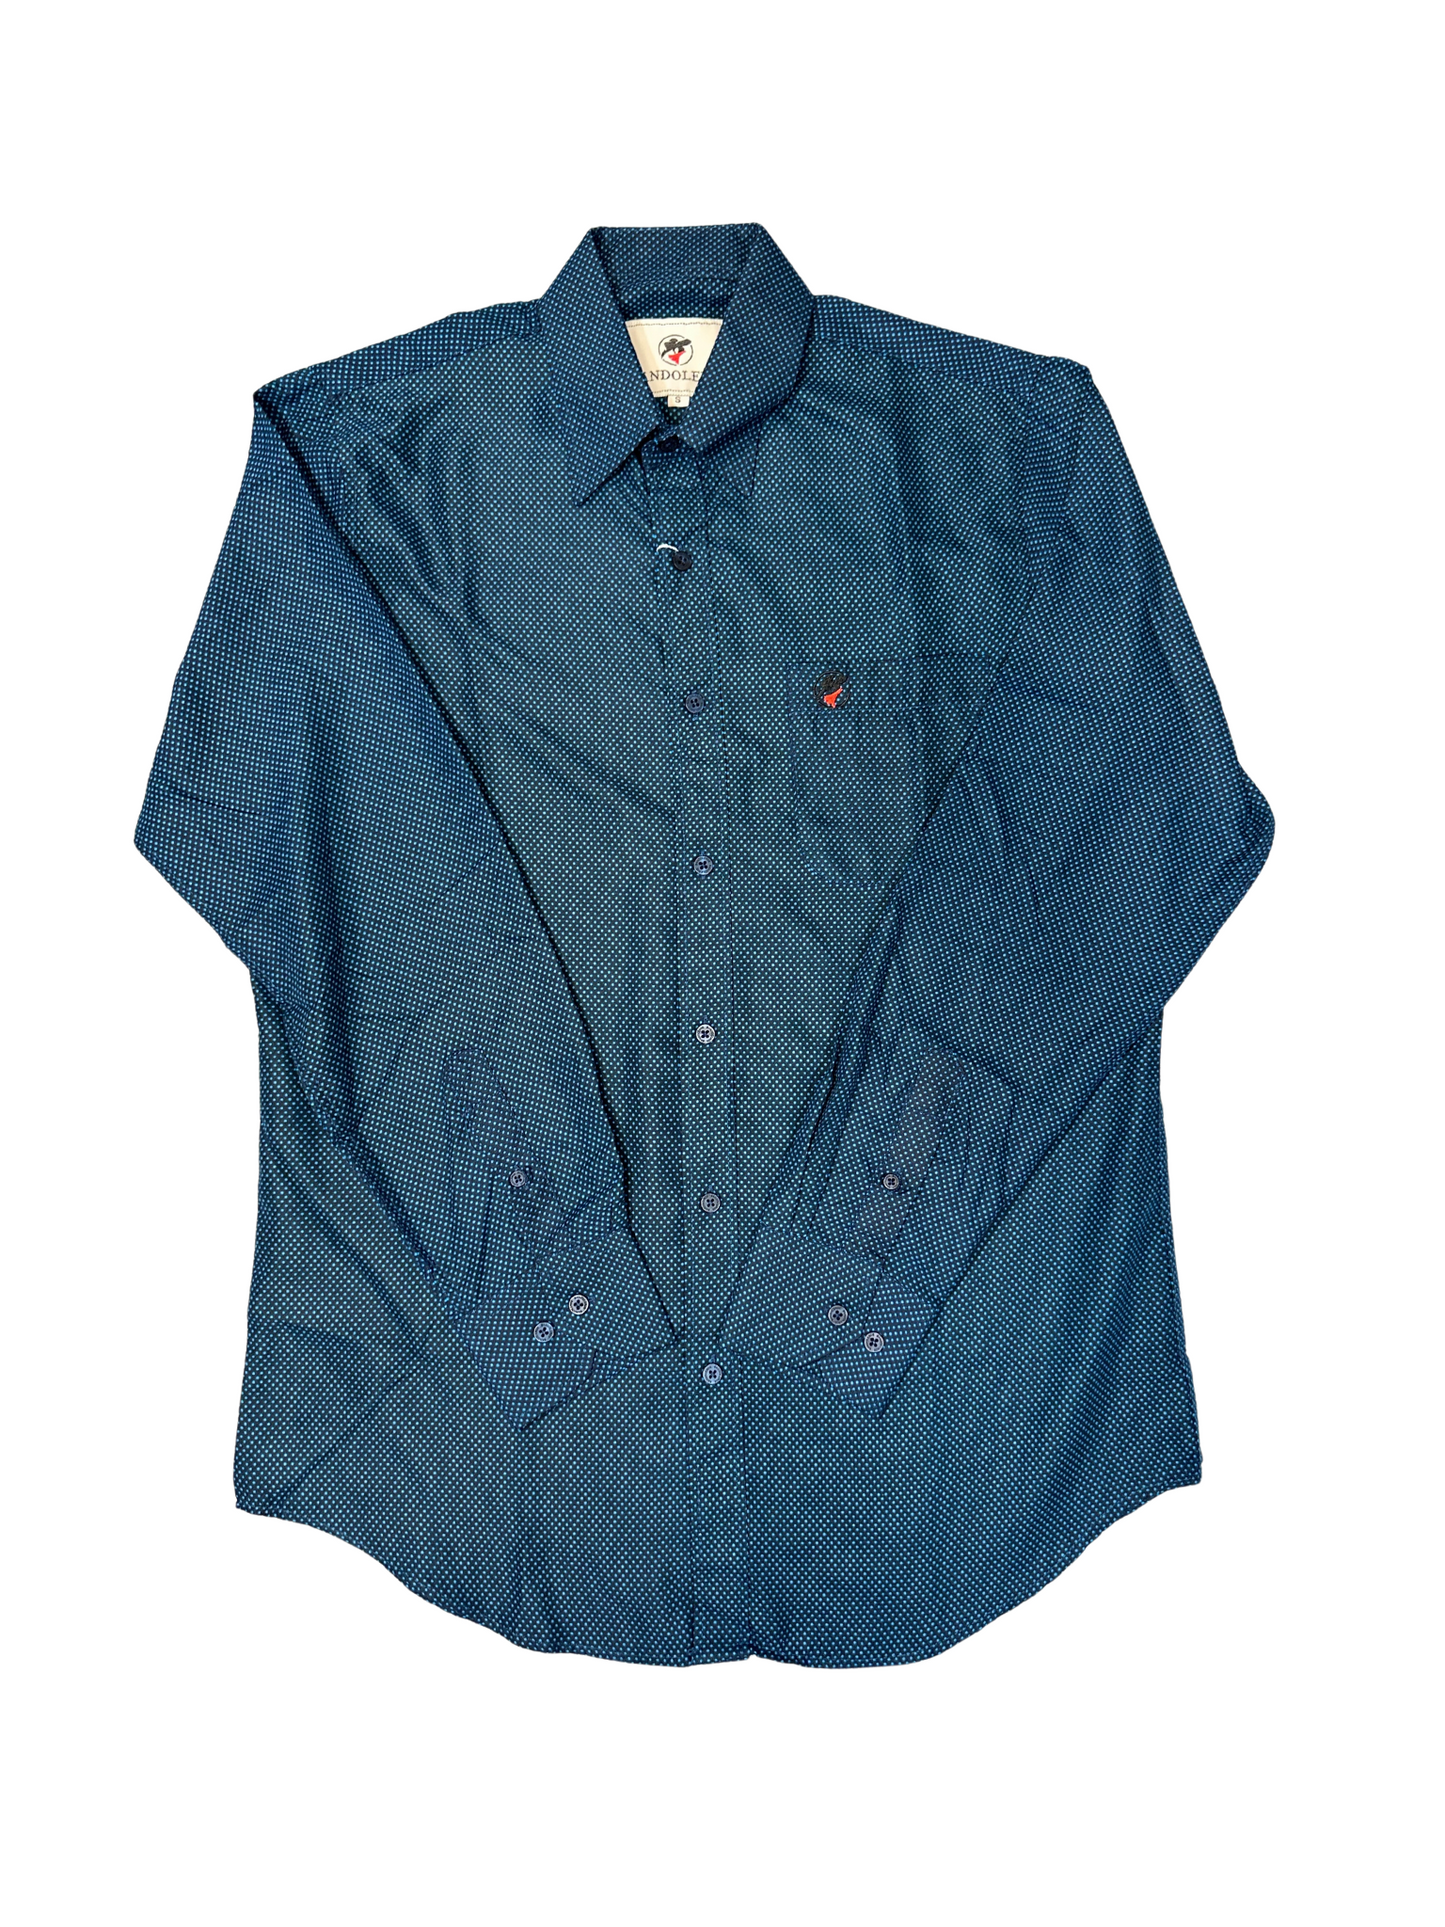 Men's Blue Dotted Button Down Shirt